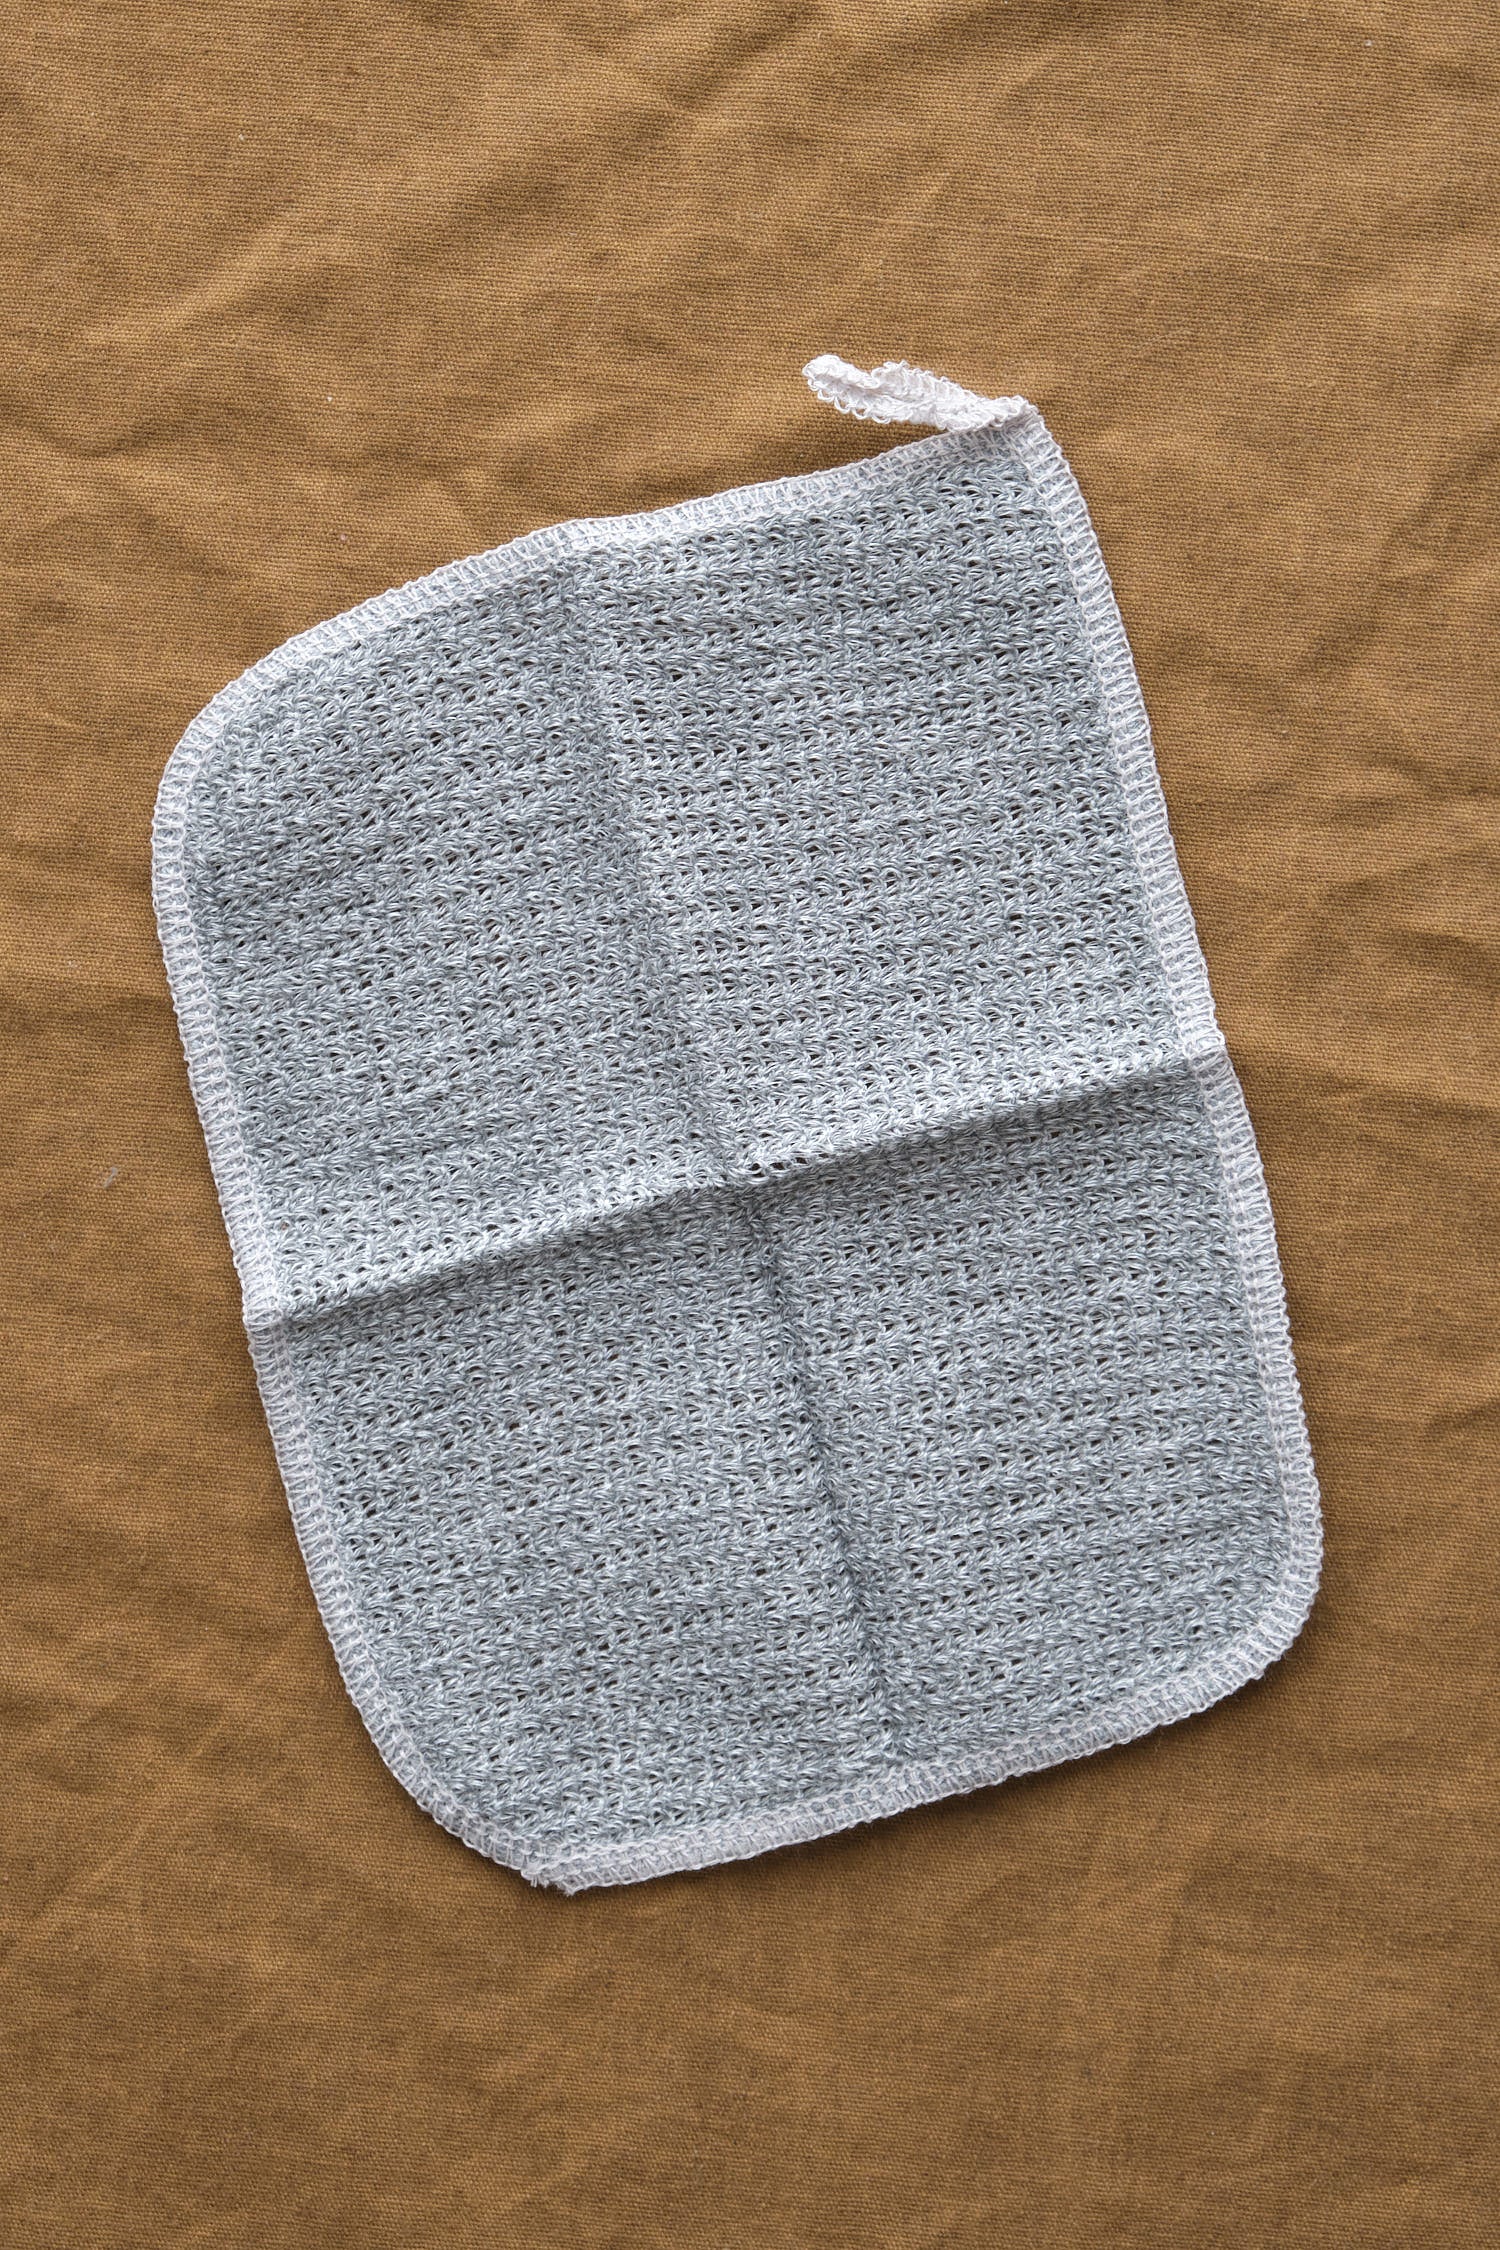 Unfolded Binchotan Charcoal Face Scrub Towel